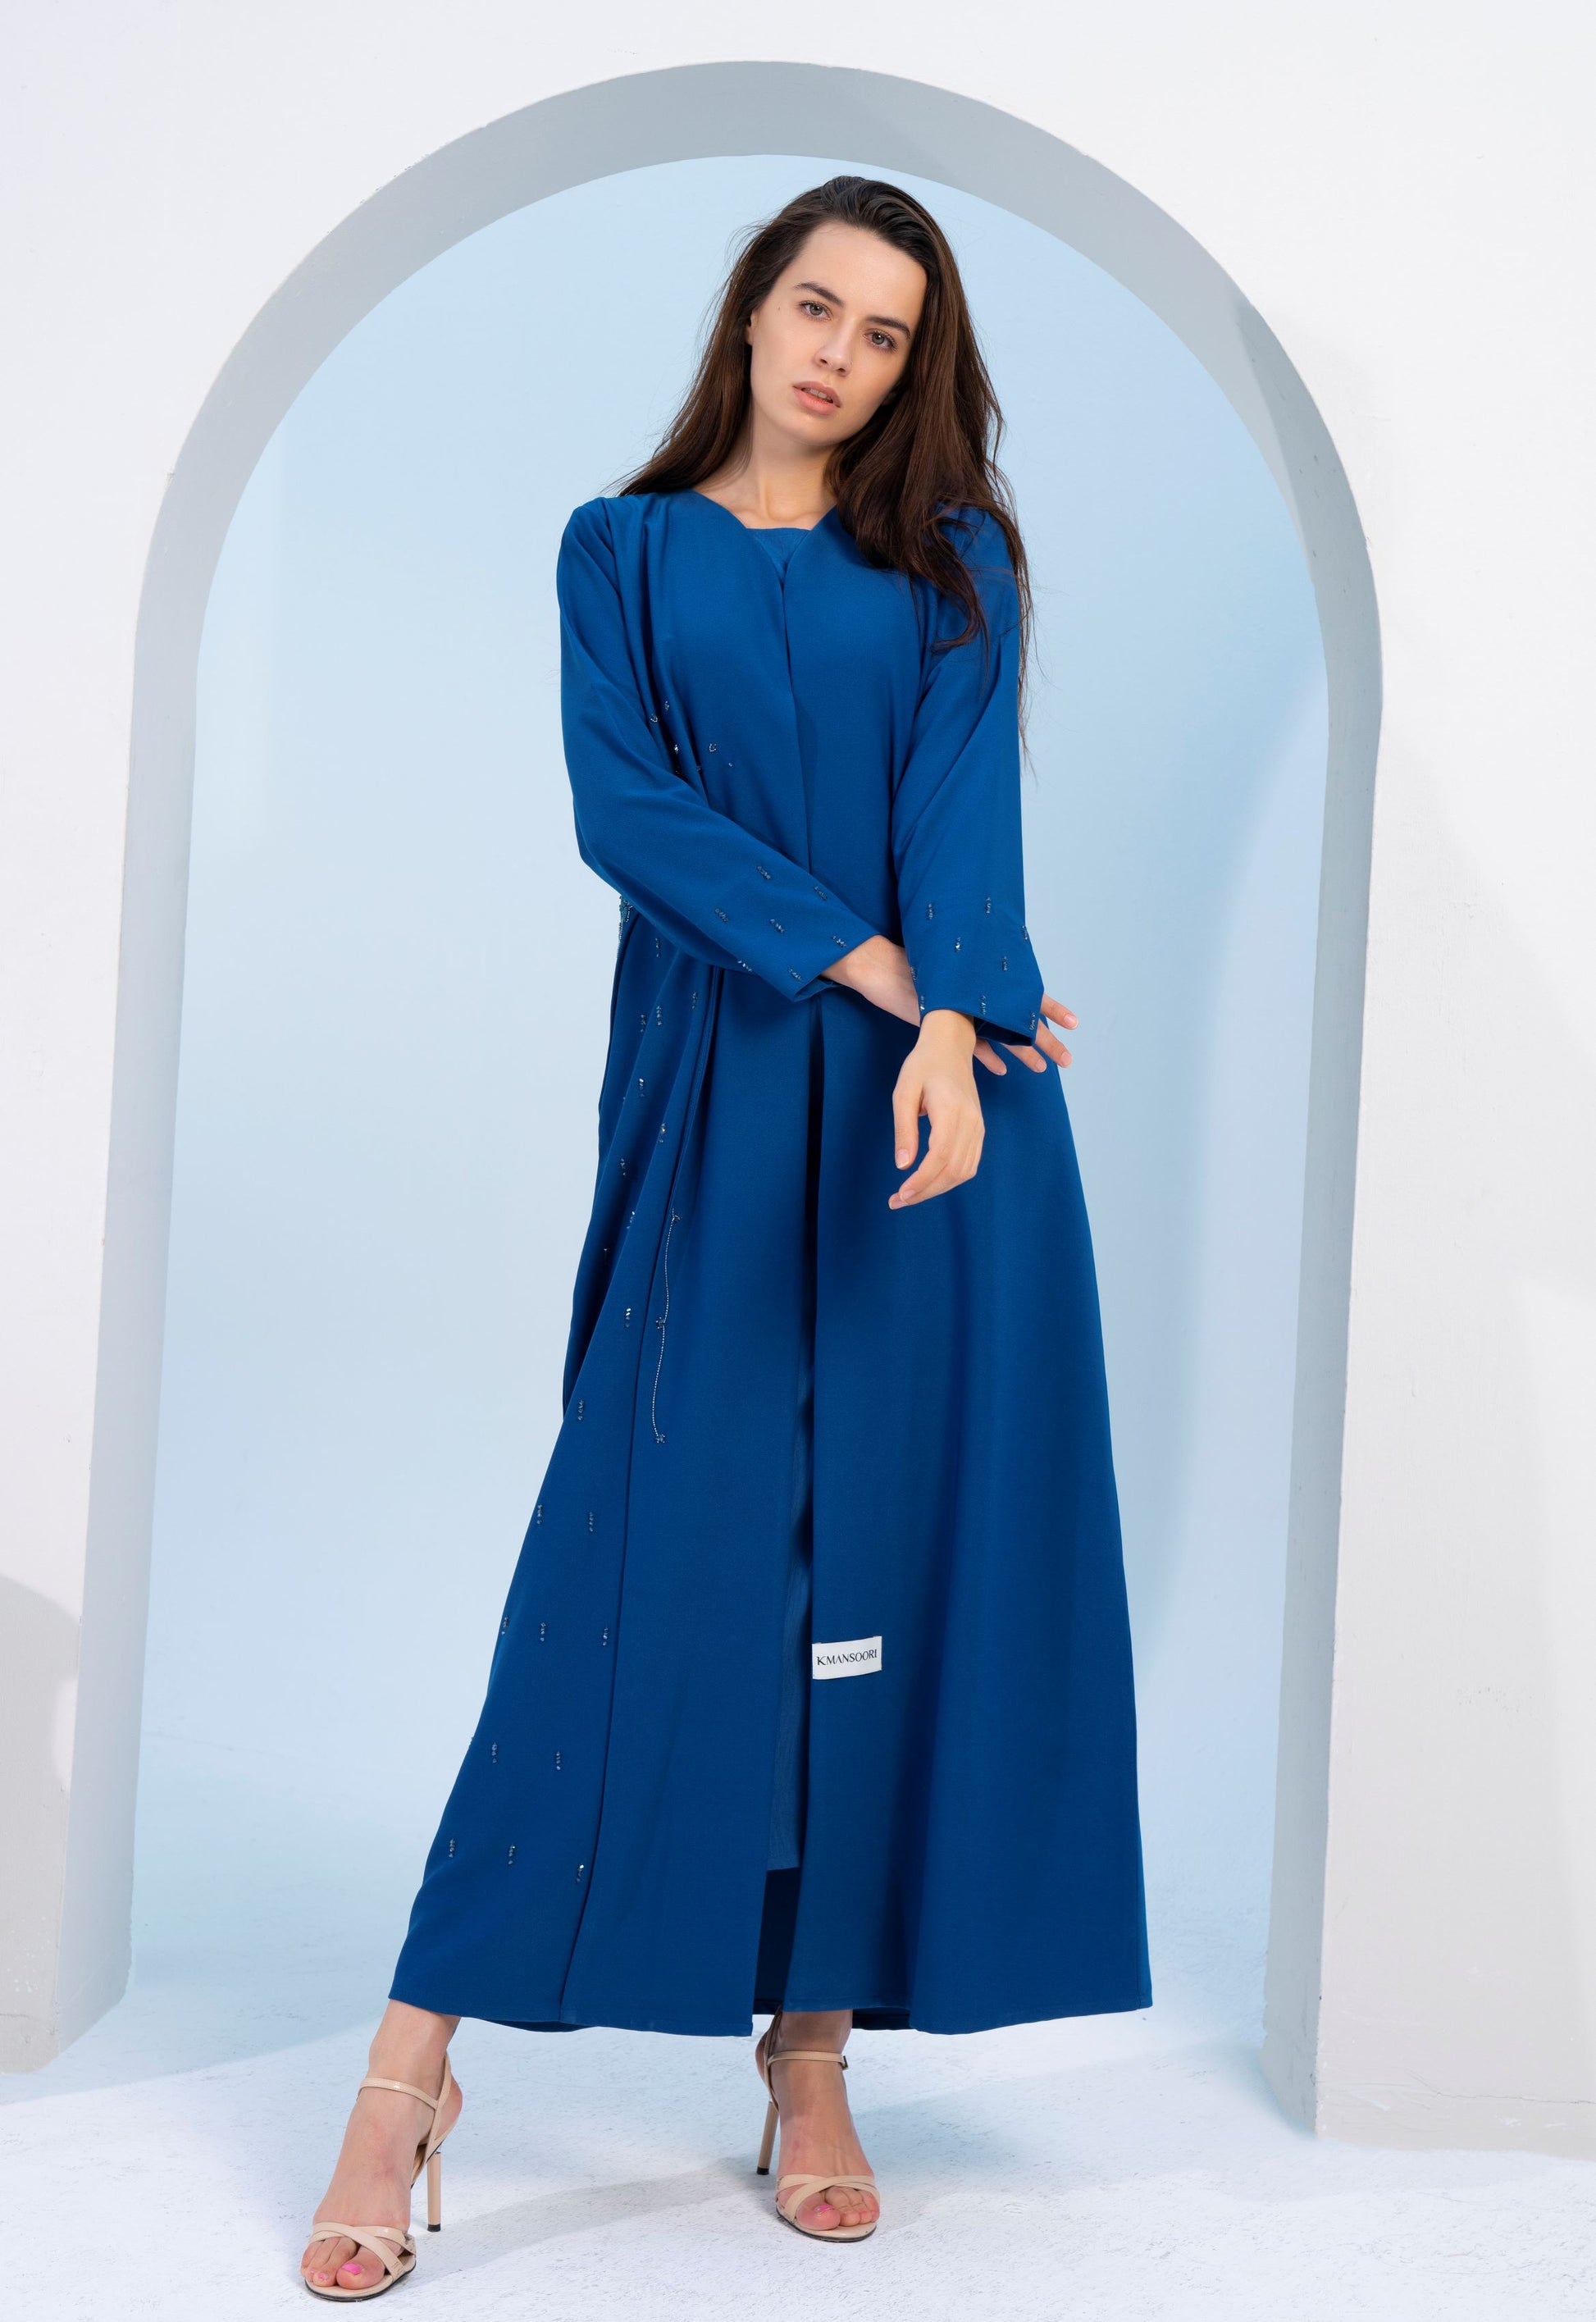 Sky blue V-neck abaya with embellishments on side and both sleeves.